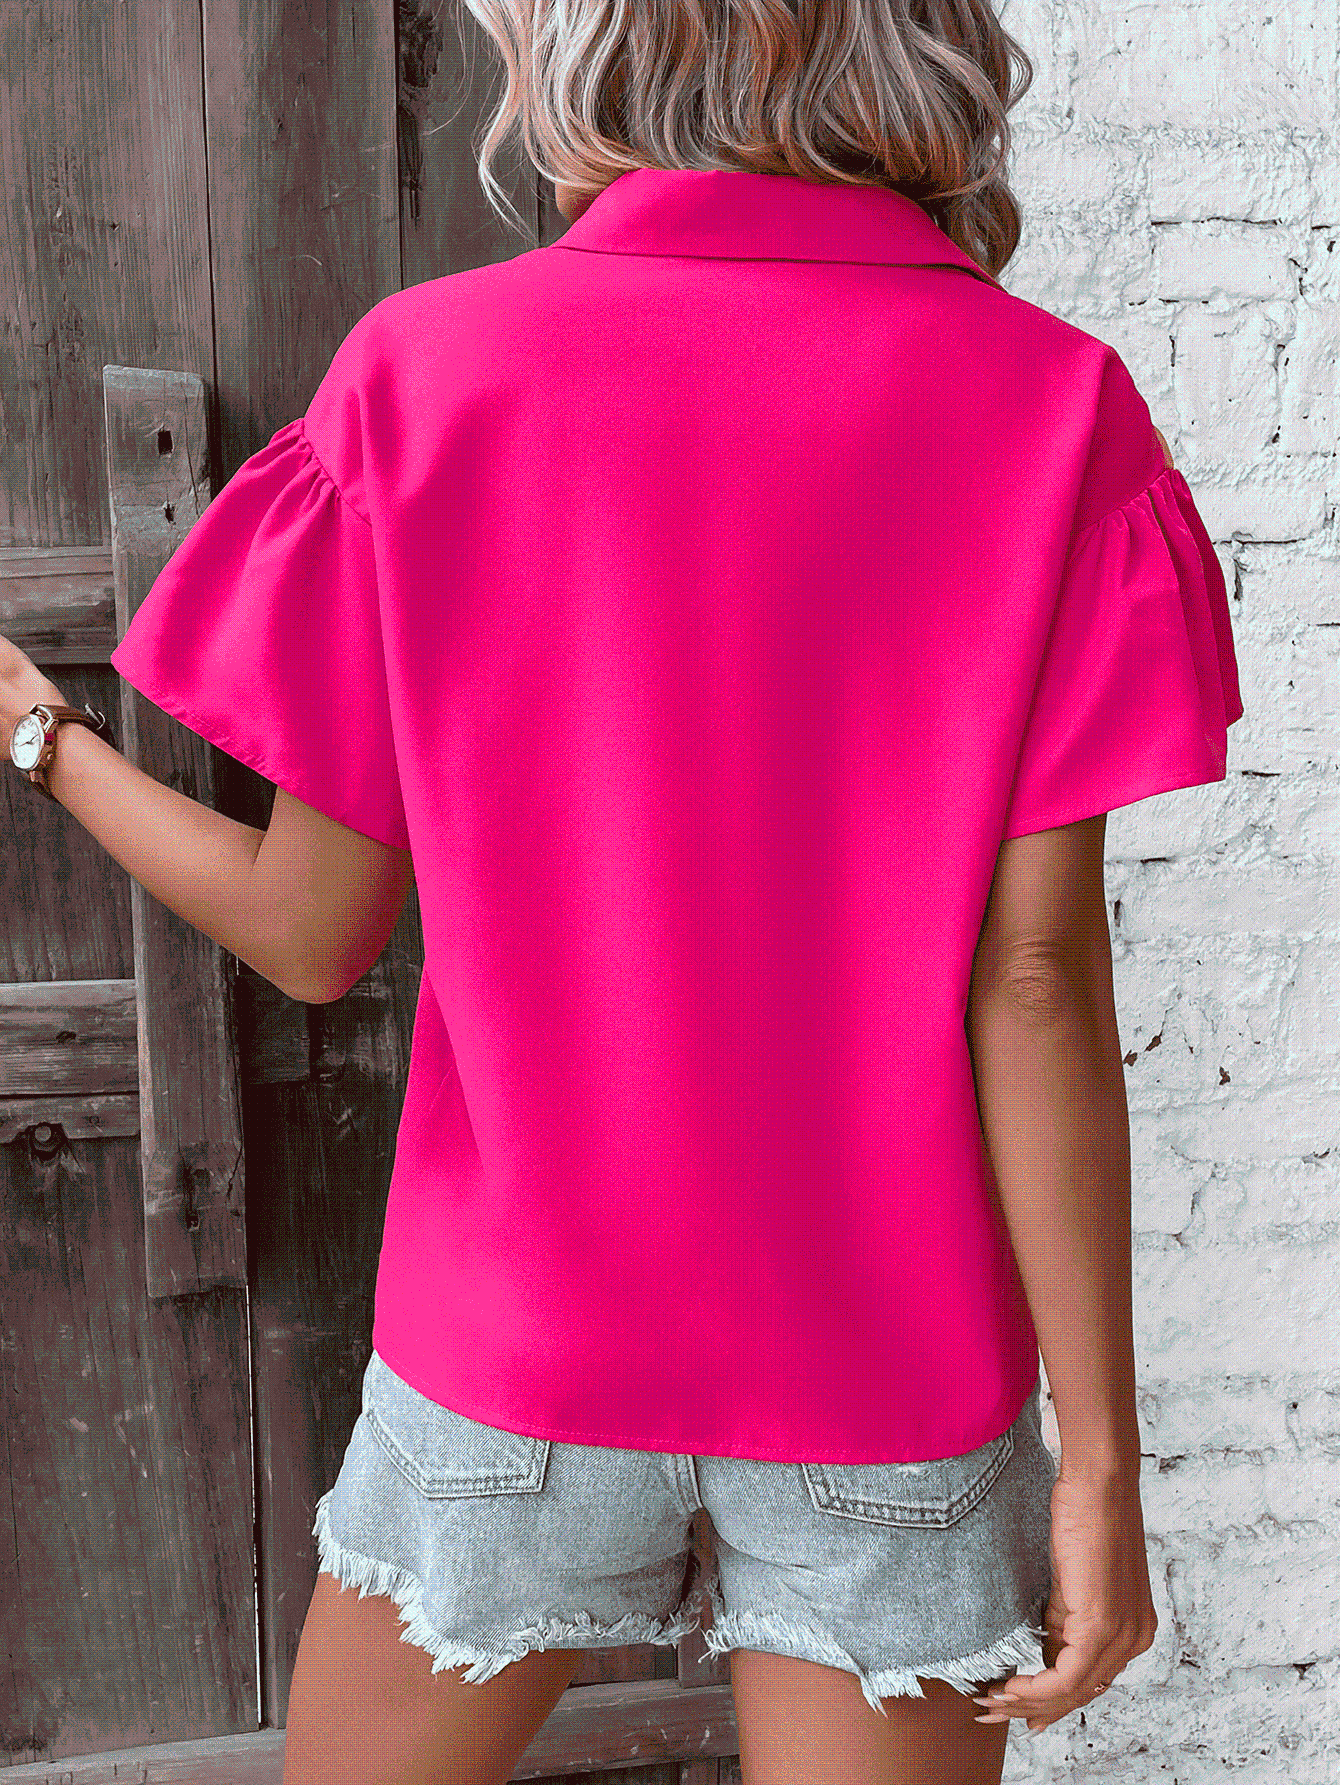 Pink Orange Contrast Short Sleeve Shirt - Shop SWR Luxe